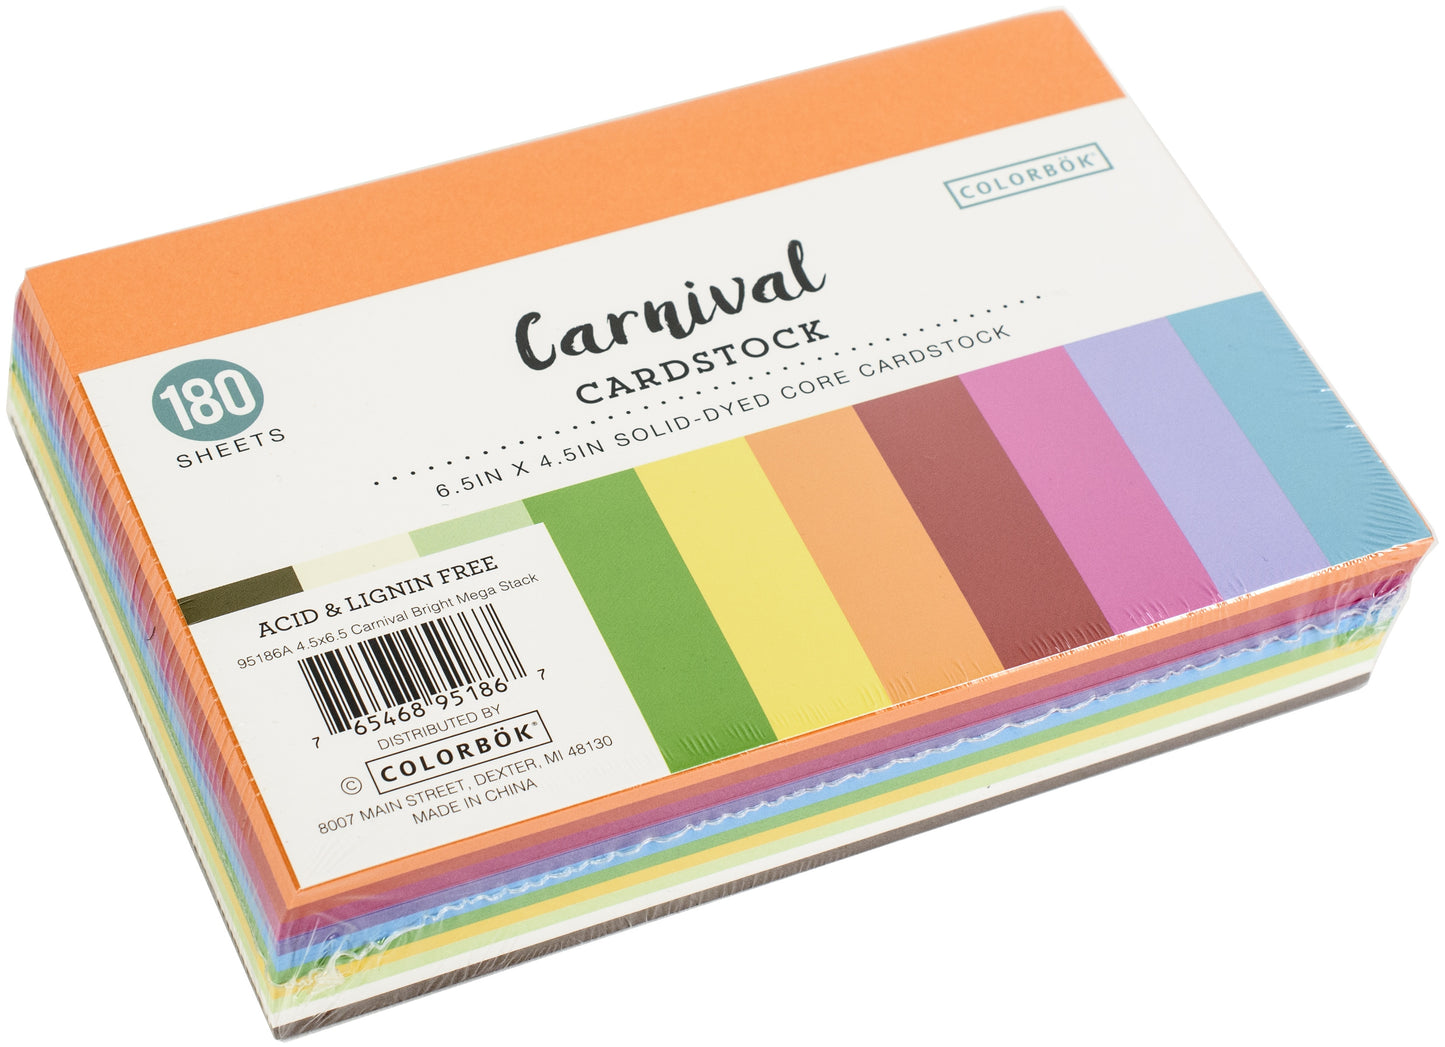 Colorbok Paper 4.5"X6.5" 180/Pkg-Carnival